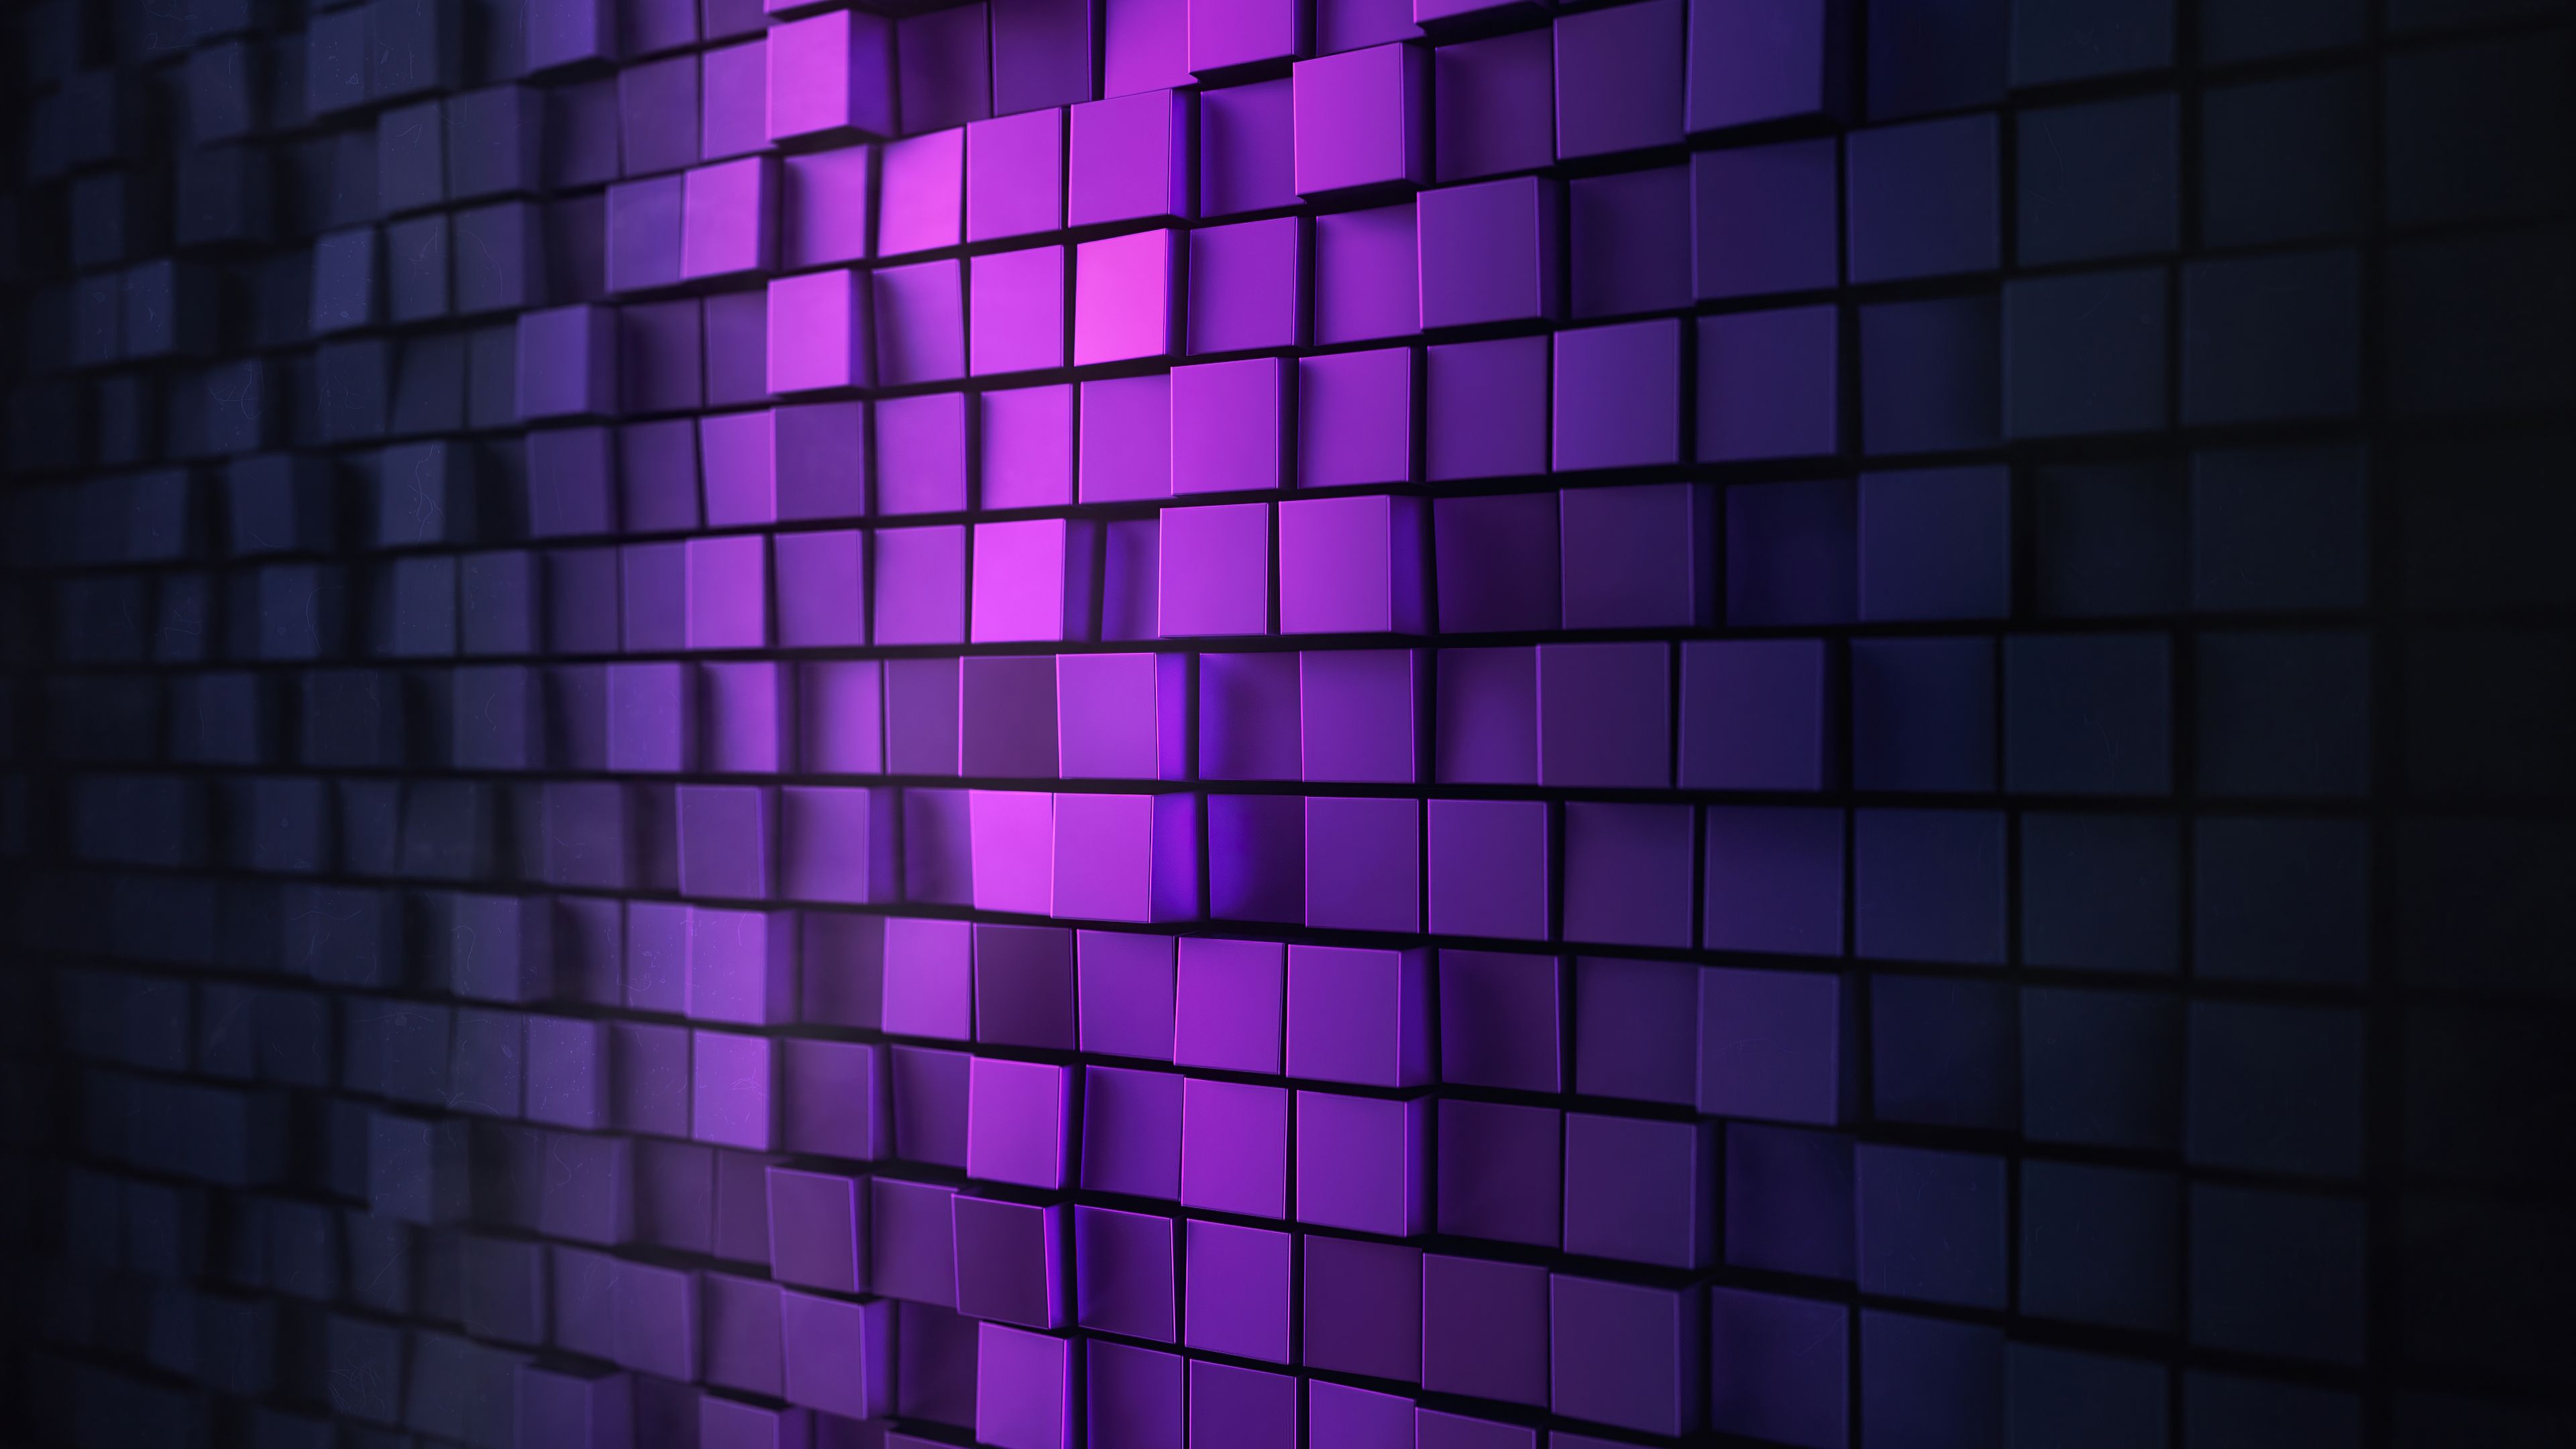 3D Purple Wall Abstract 4k 3D Purple Wall Abstract 4k wallpaper. iPhone wallpaper landscape, Amazing HD wallpaper, Active wallpaper